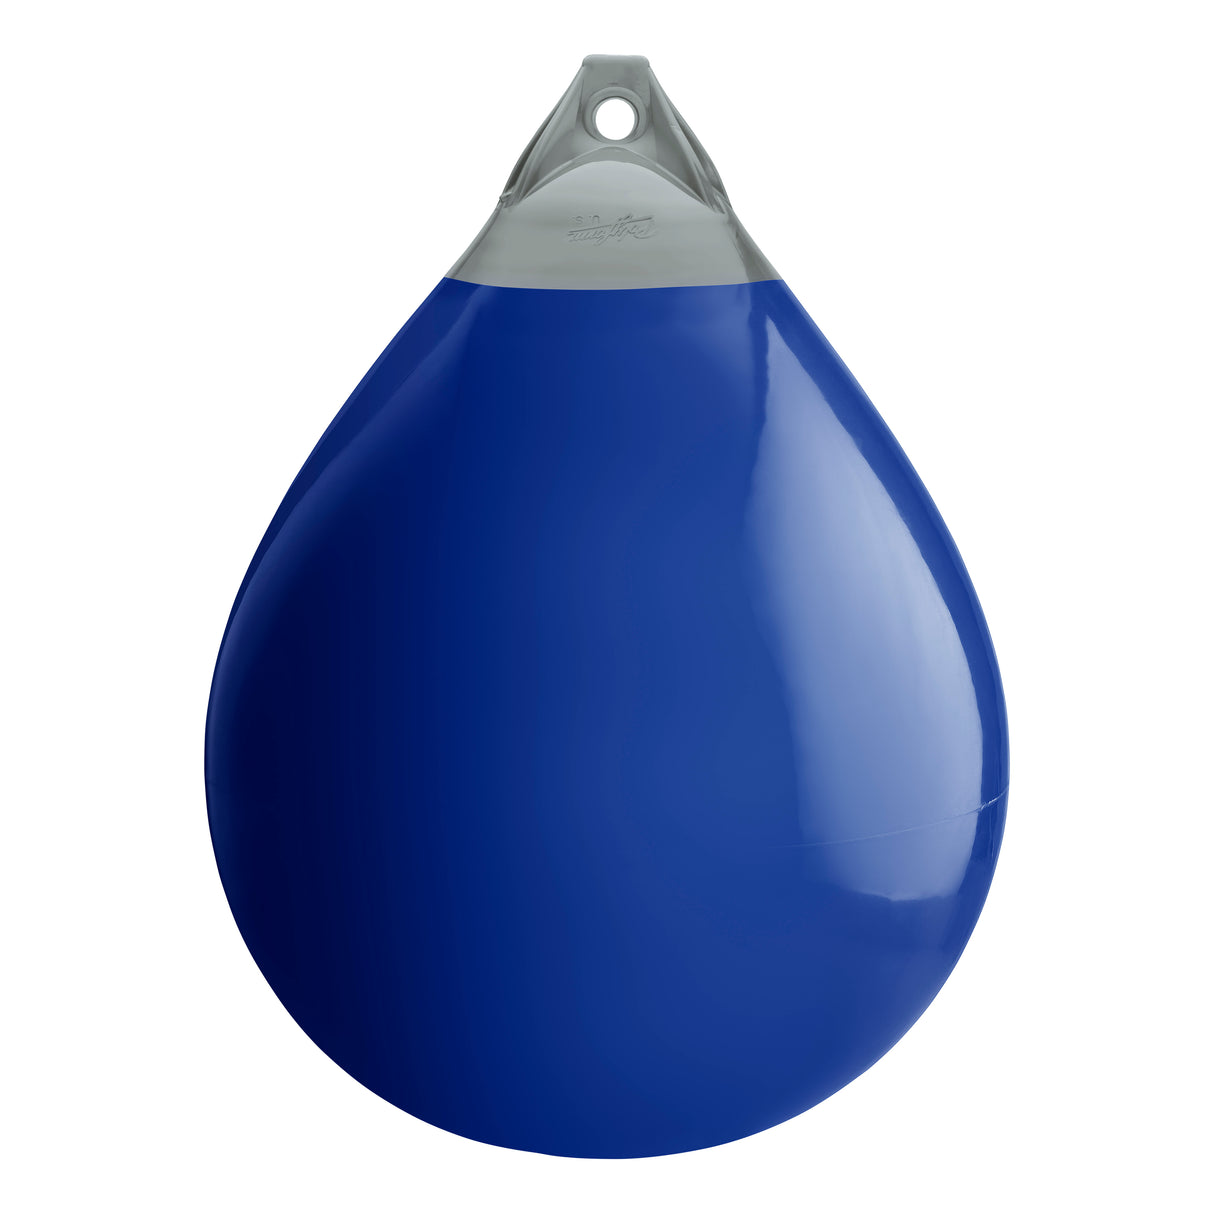 Cobalt Blue buoy with Grey-Top, Polyform A-7